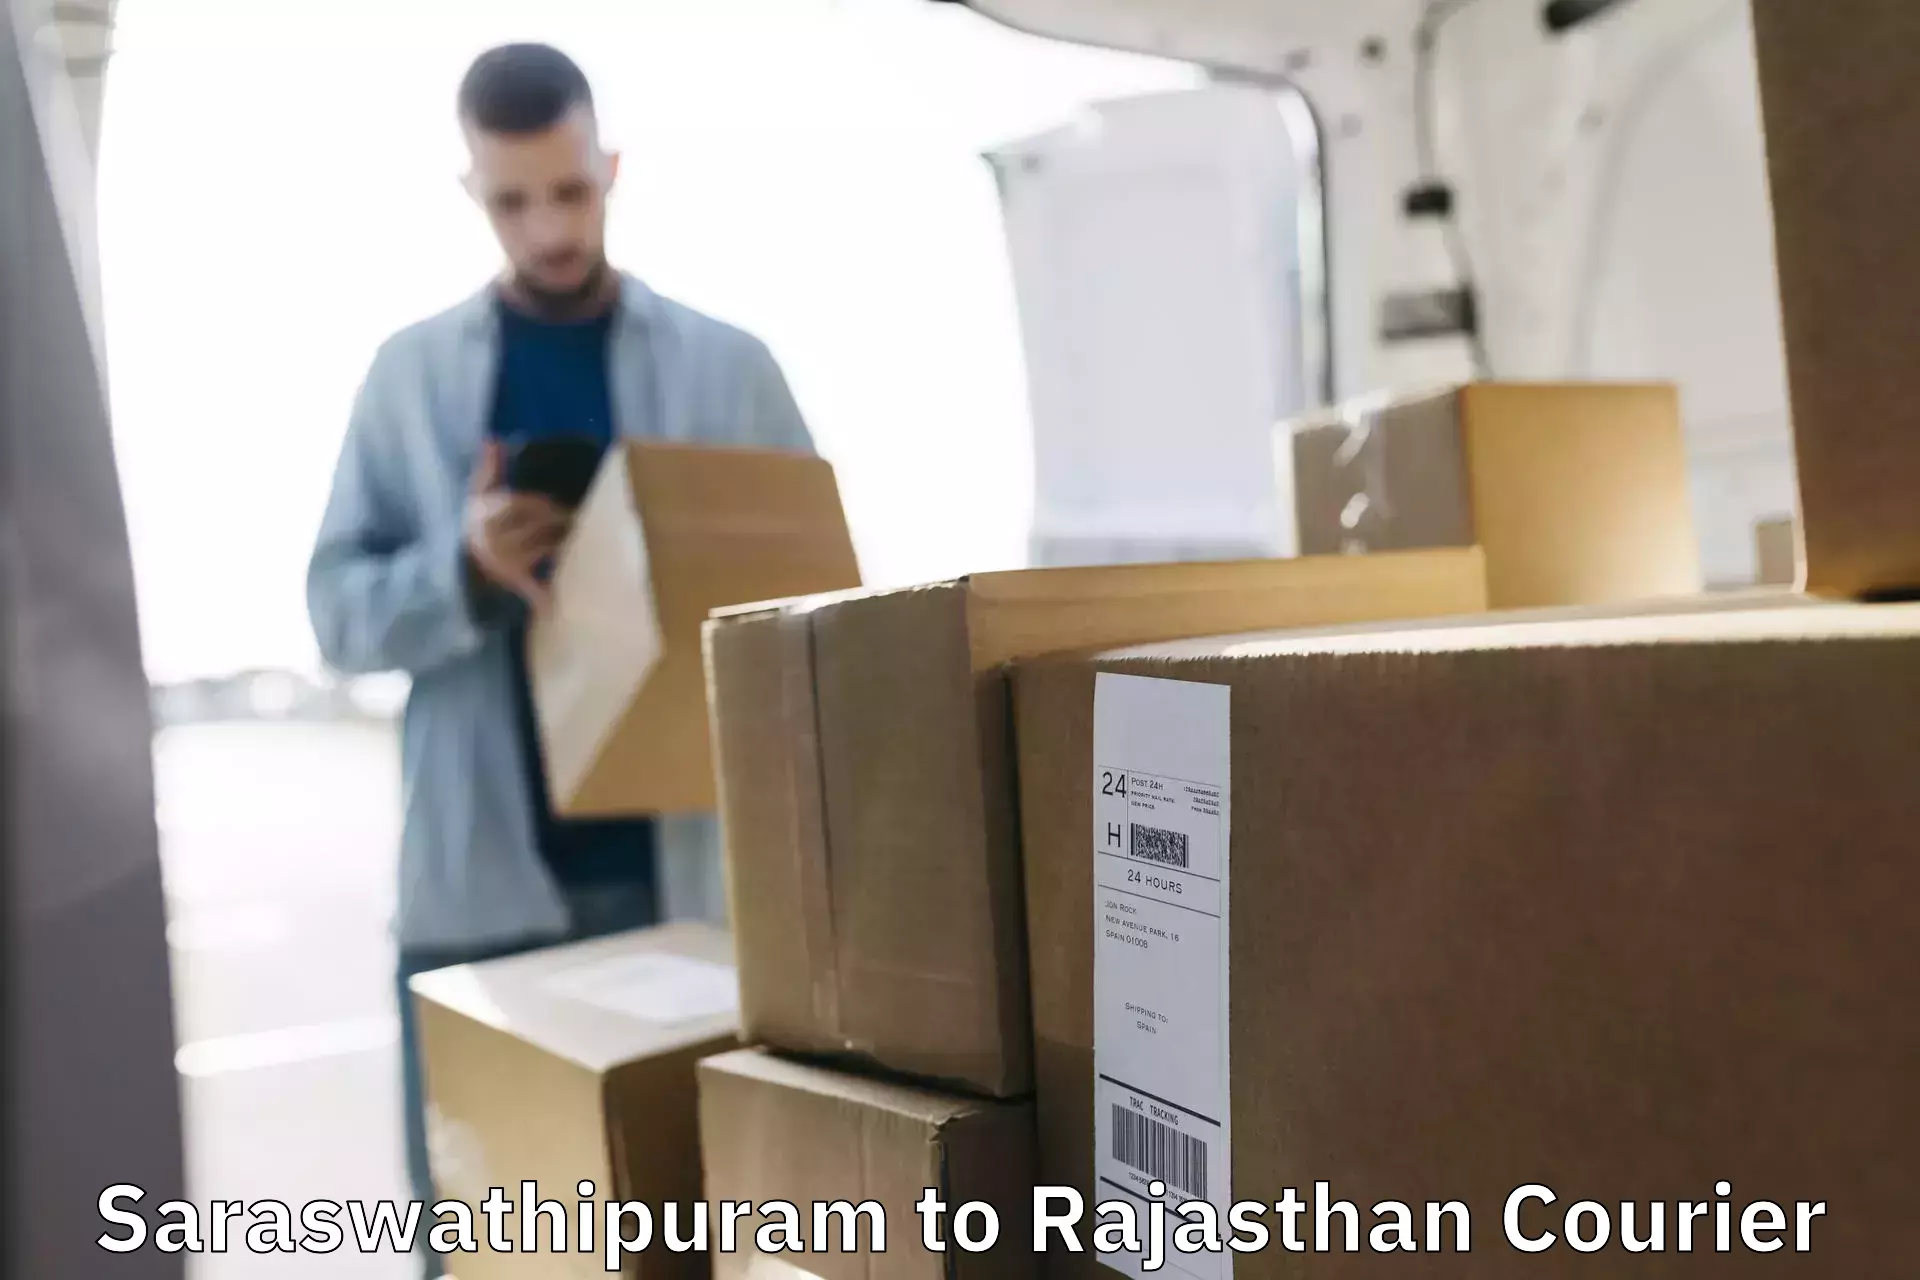 Premium courier services in Saraswathipuram to Sri Vijaynagar